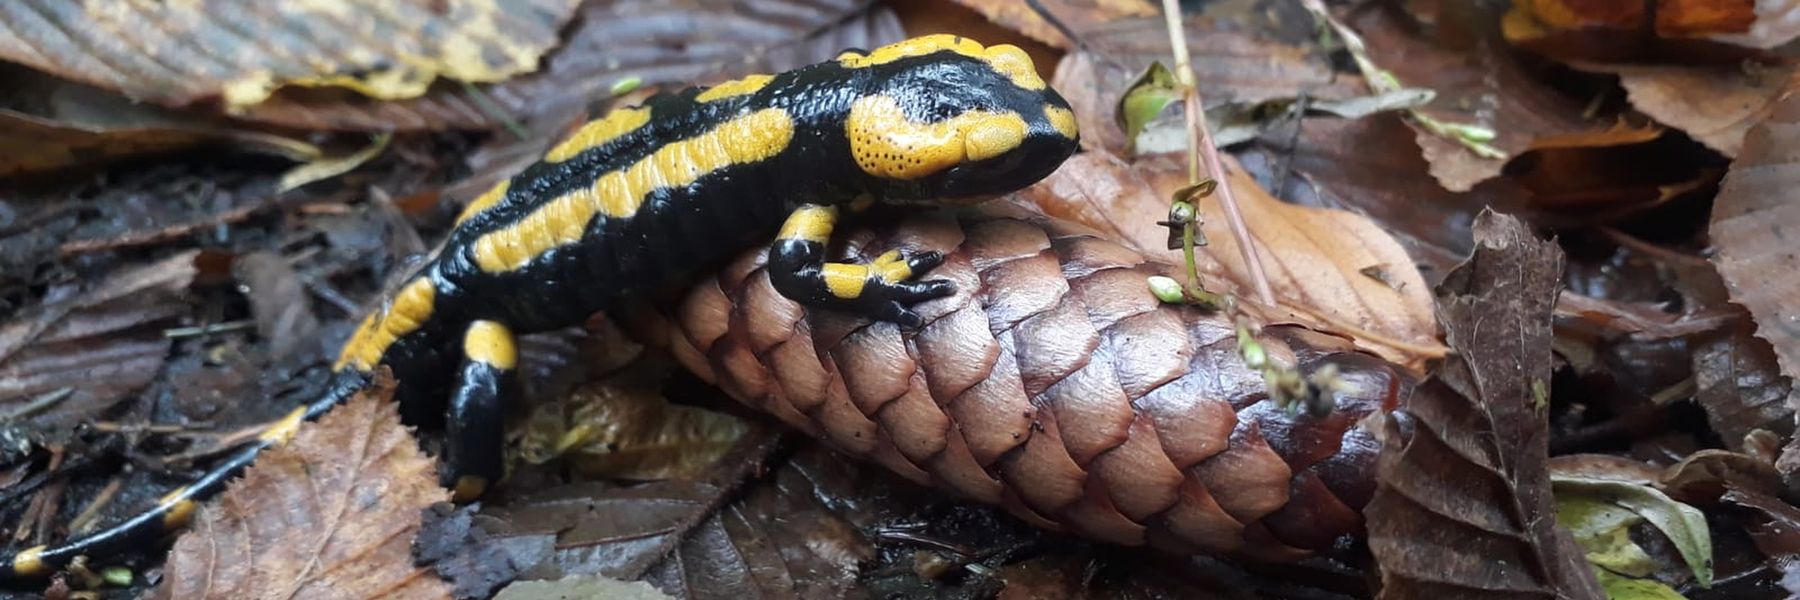 Natur bewahren Salamander